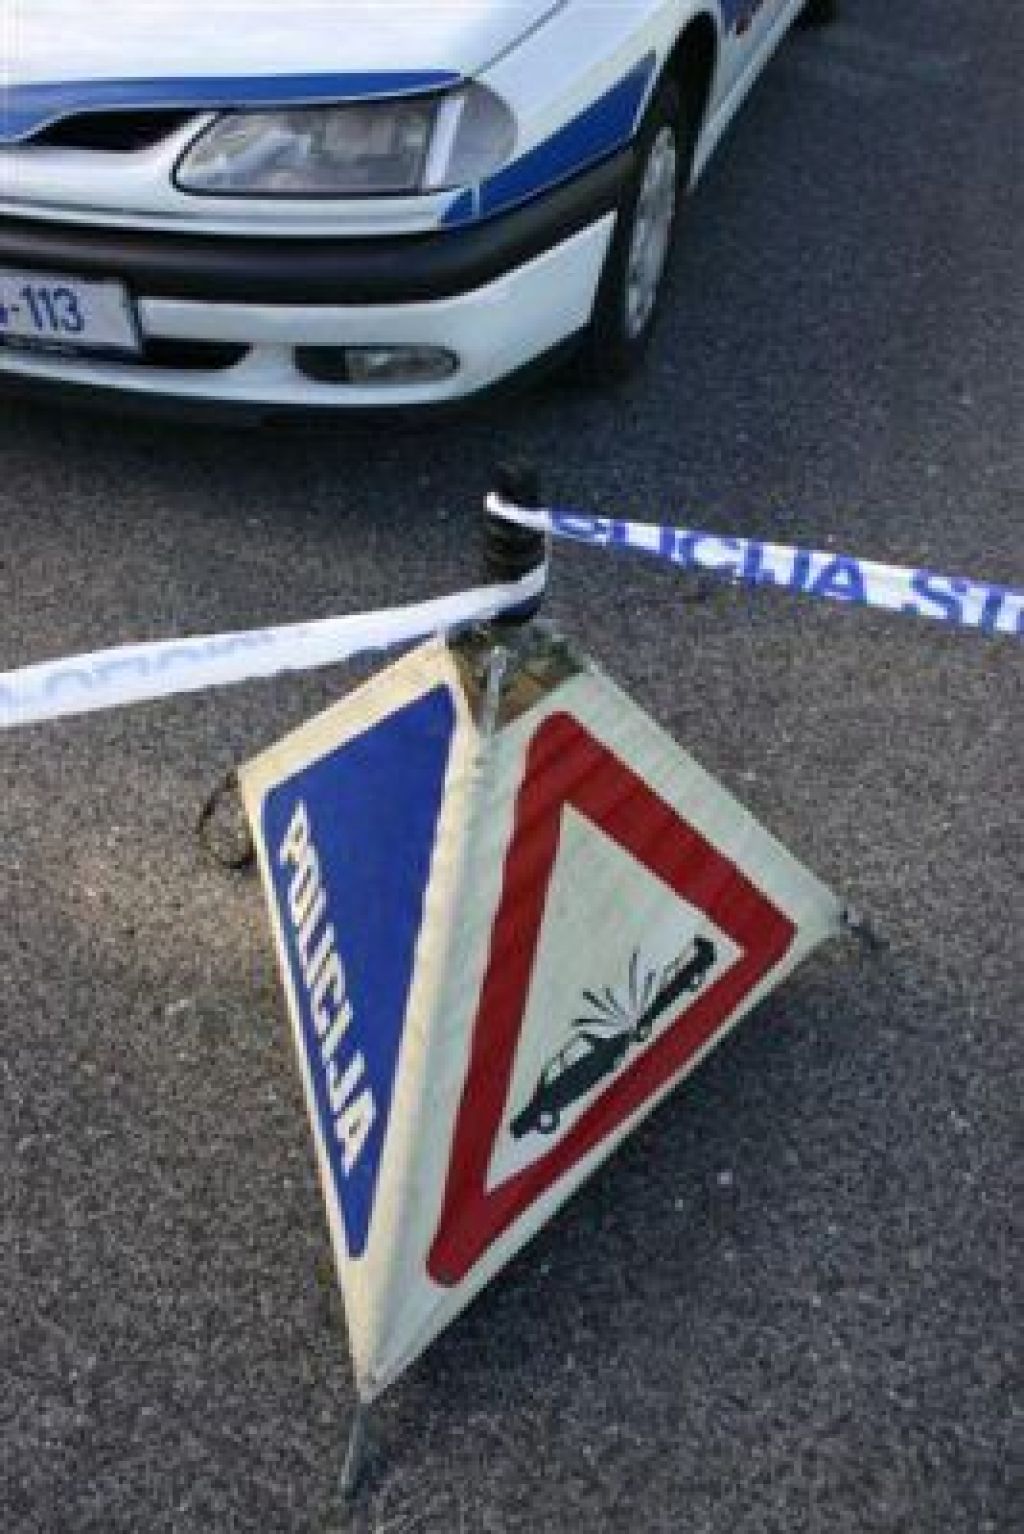 Ste videli nesrečo na Dravograjski cesti v Mariboru?